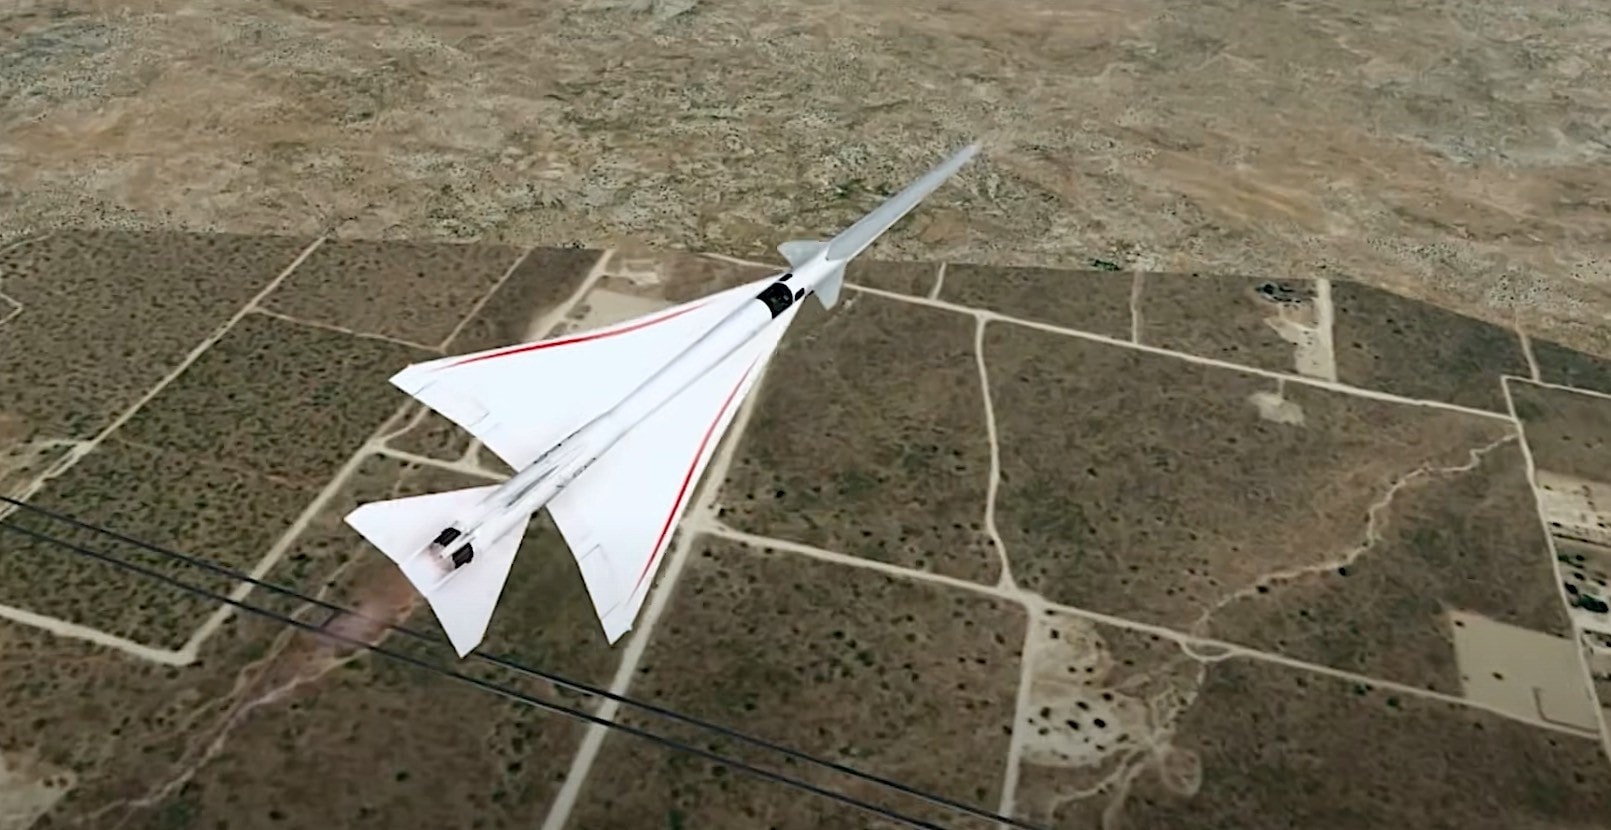 NASA's Quiet Supersonic X-59 Aircraft